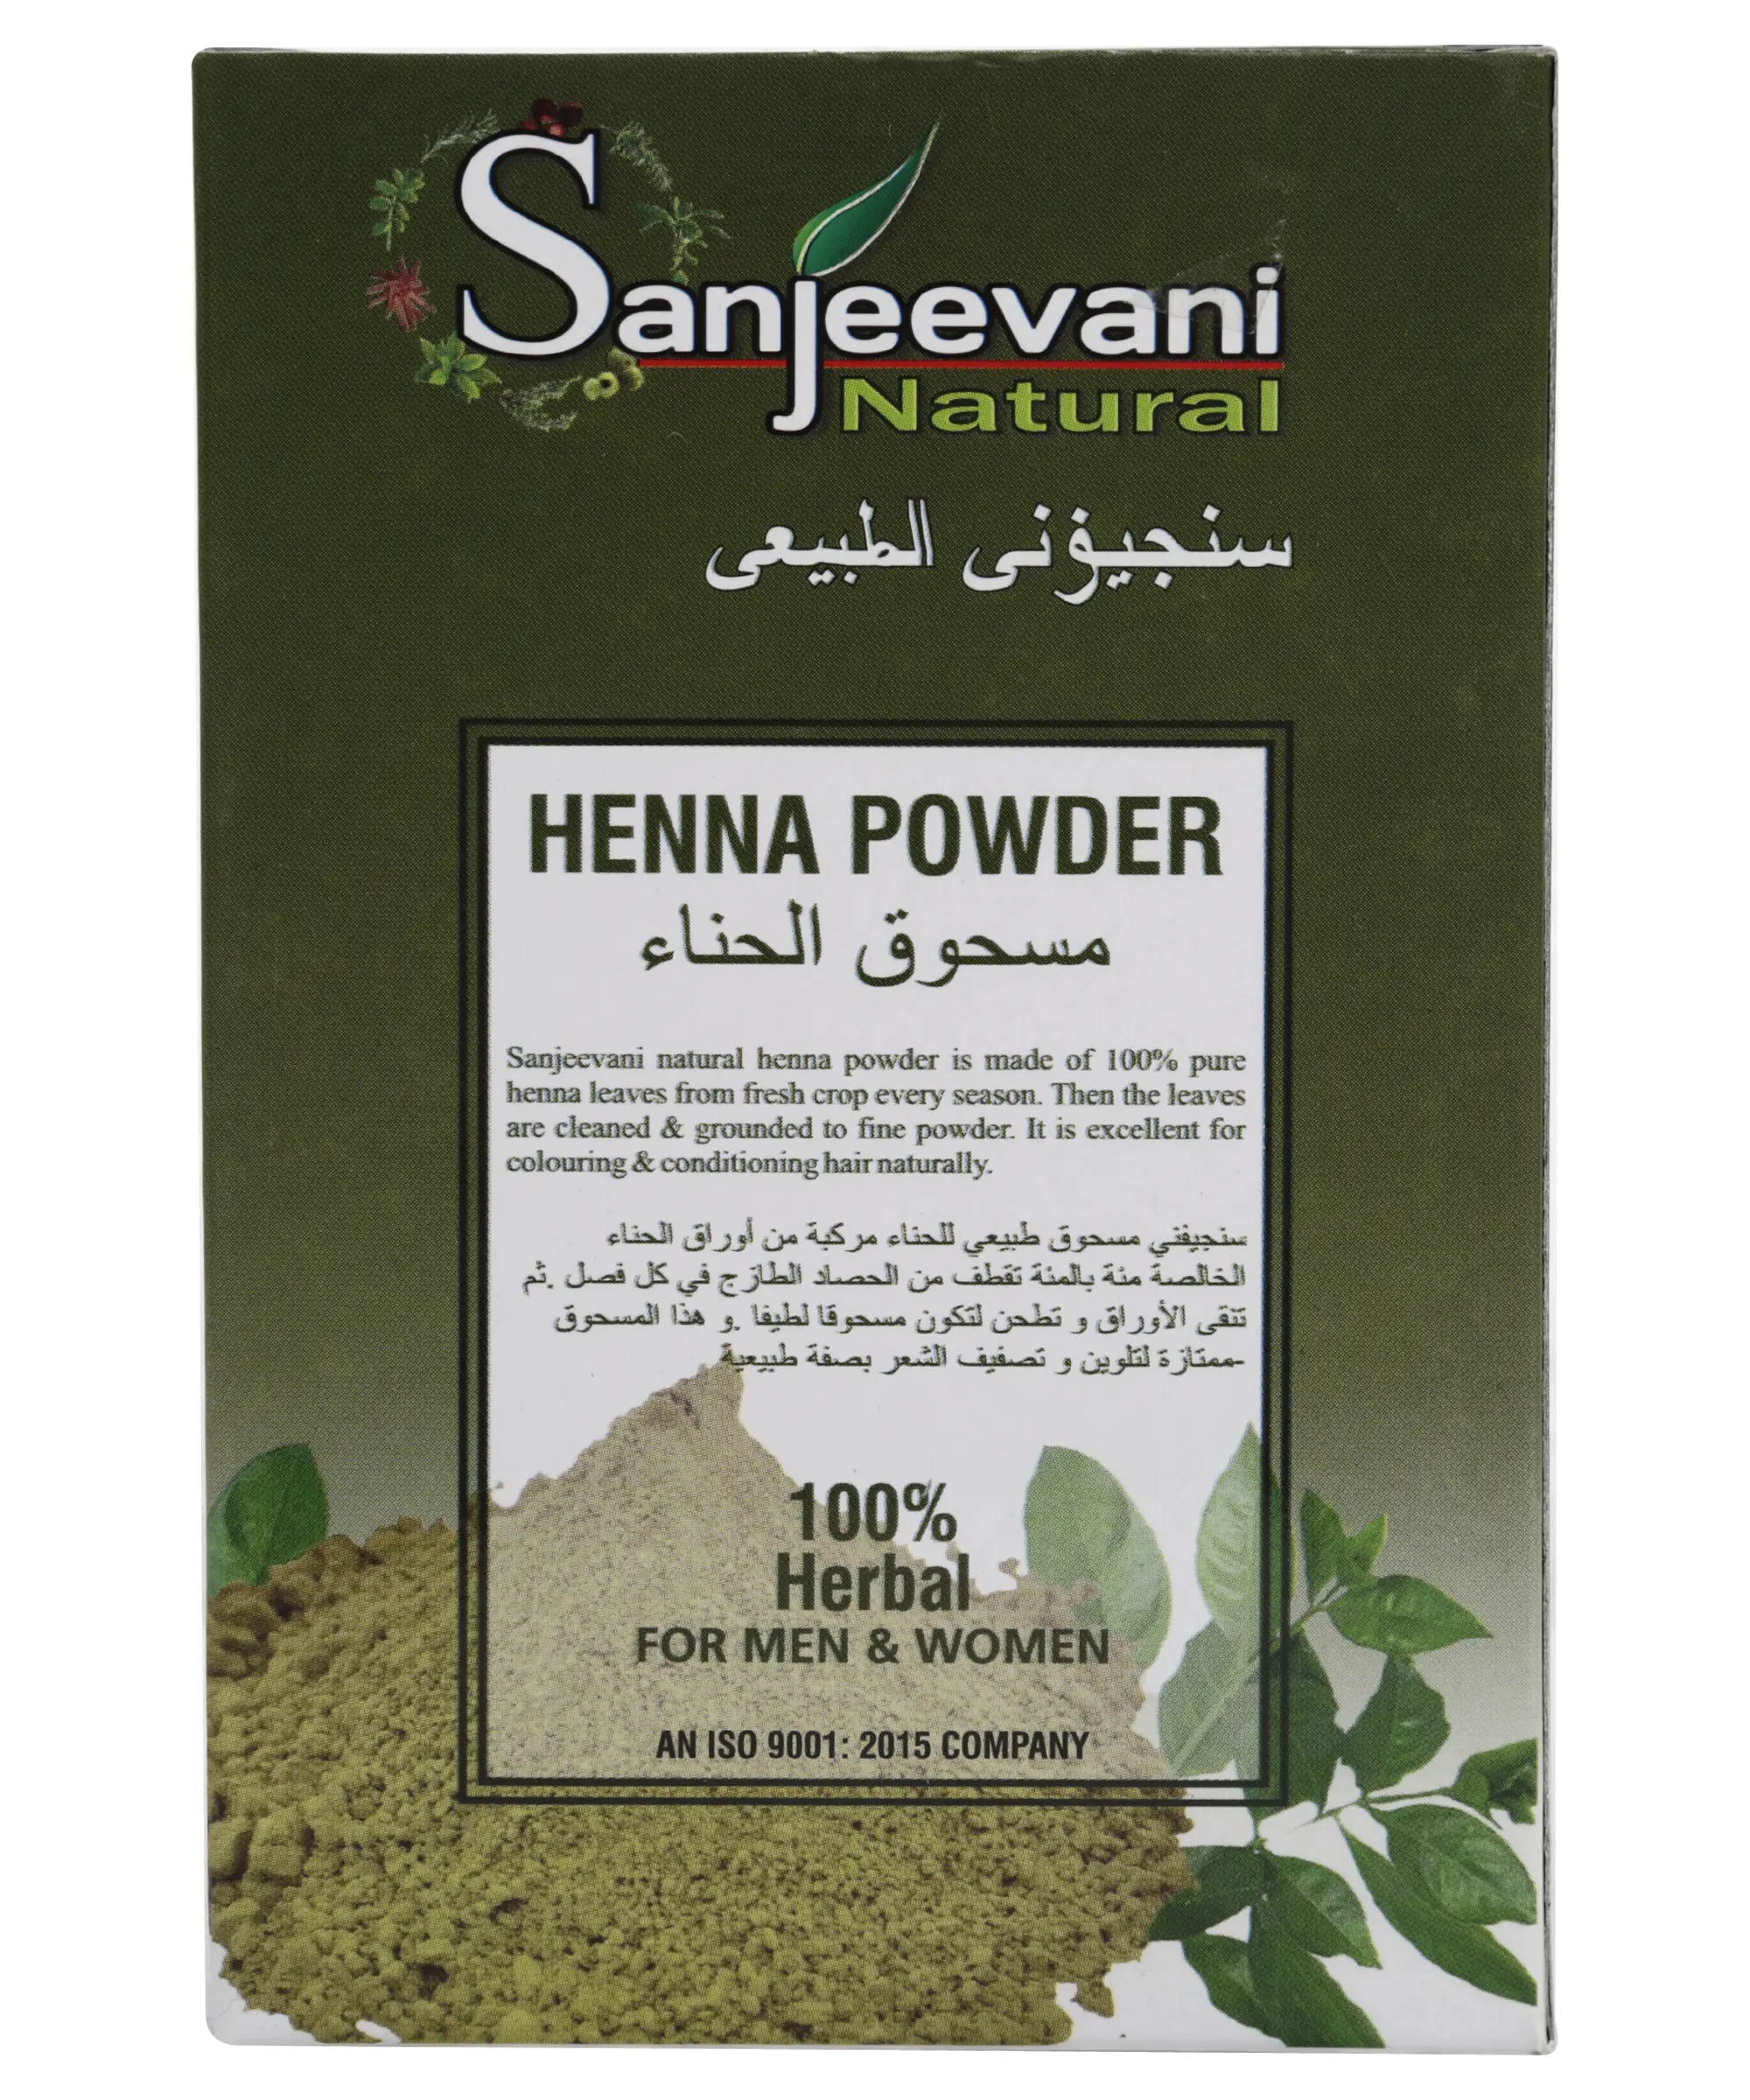 Ppd livre 100% cor natural herbal henna natural do rajasque